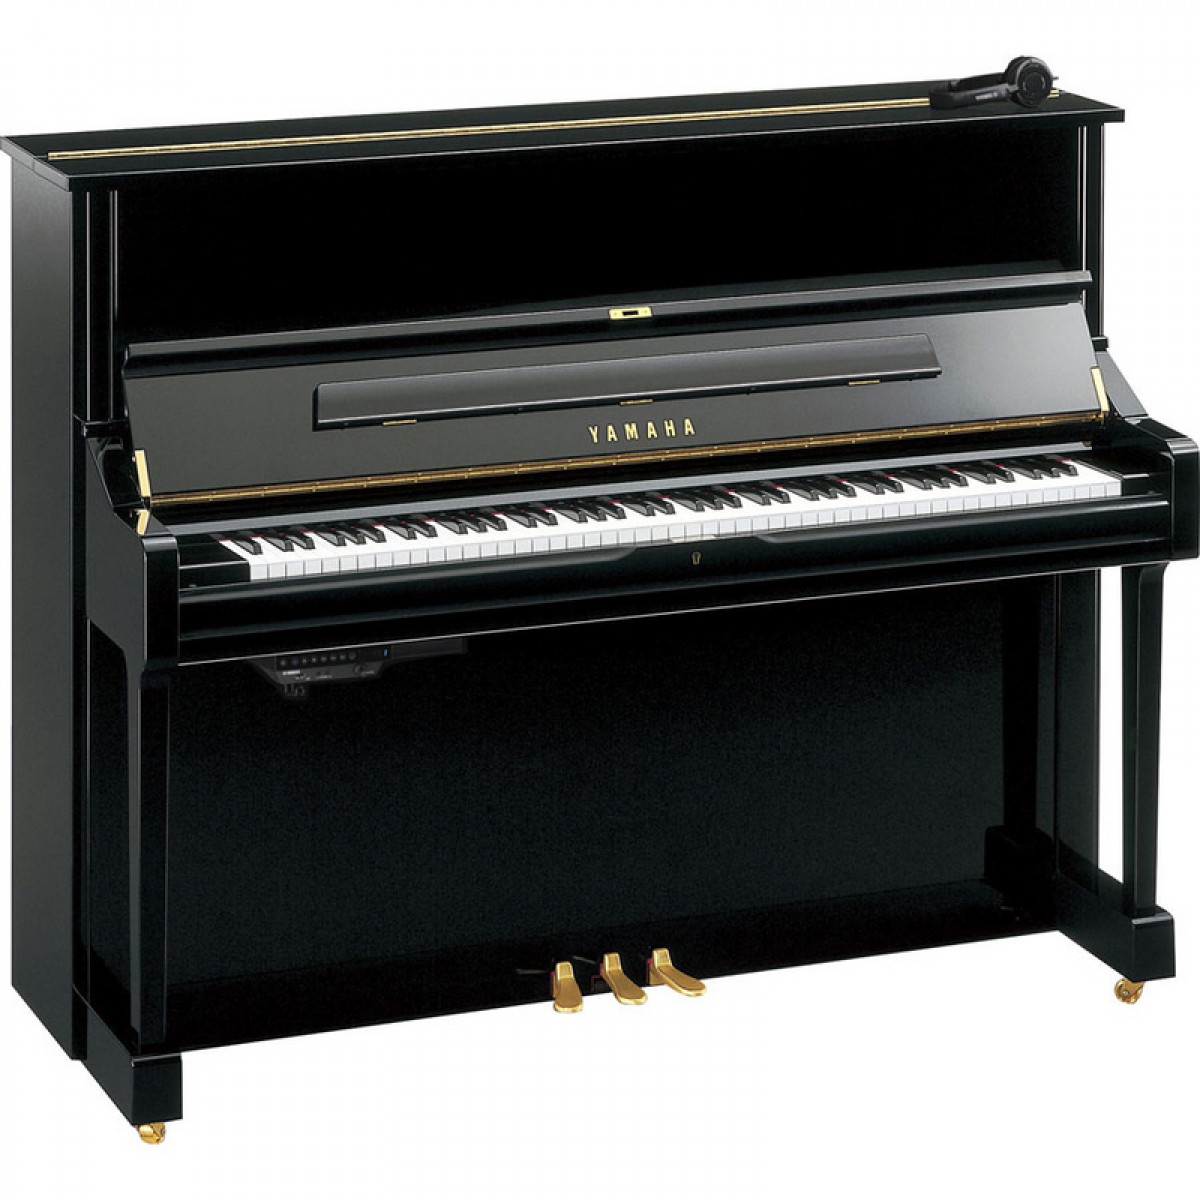 Yamaha Klavier U1 Silent schwarz matt